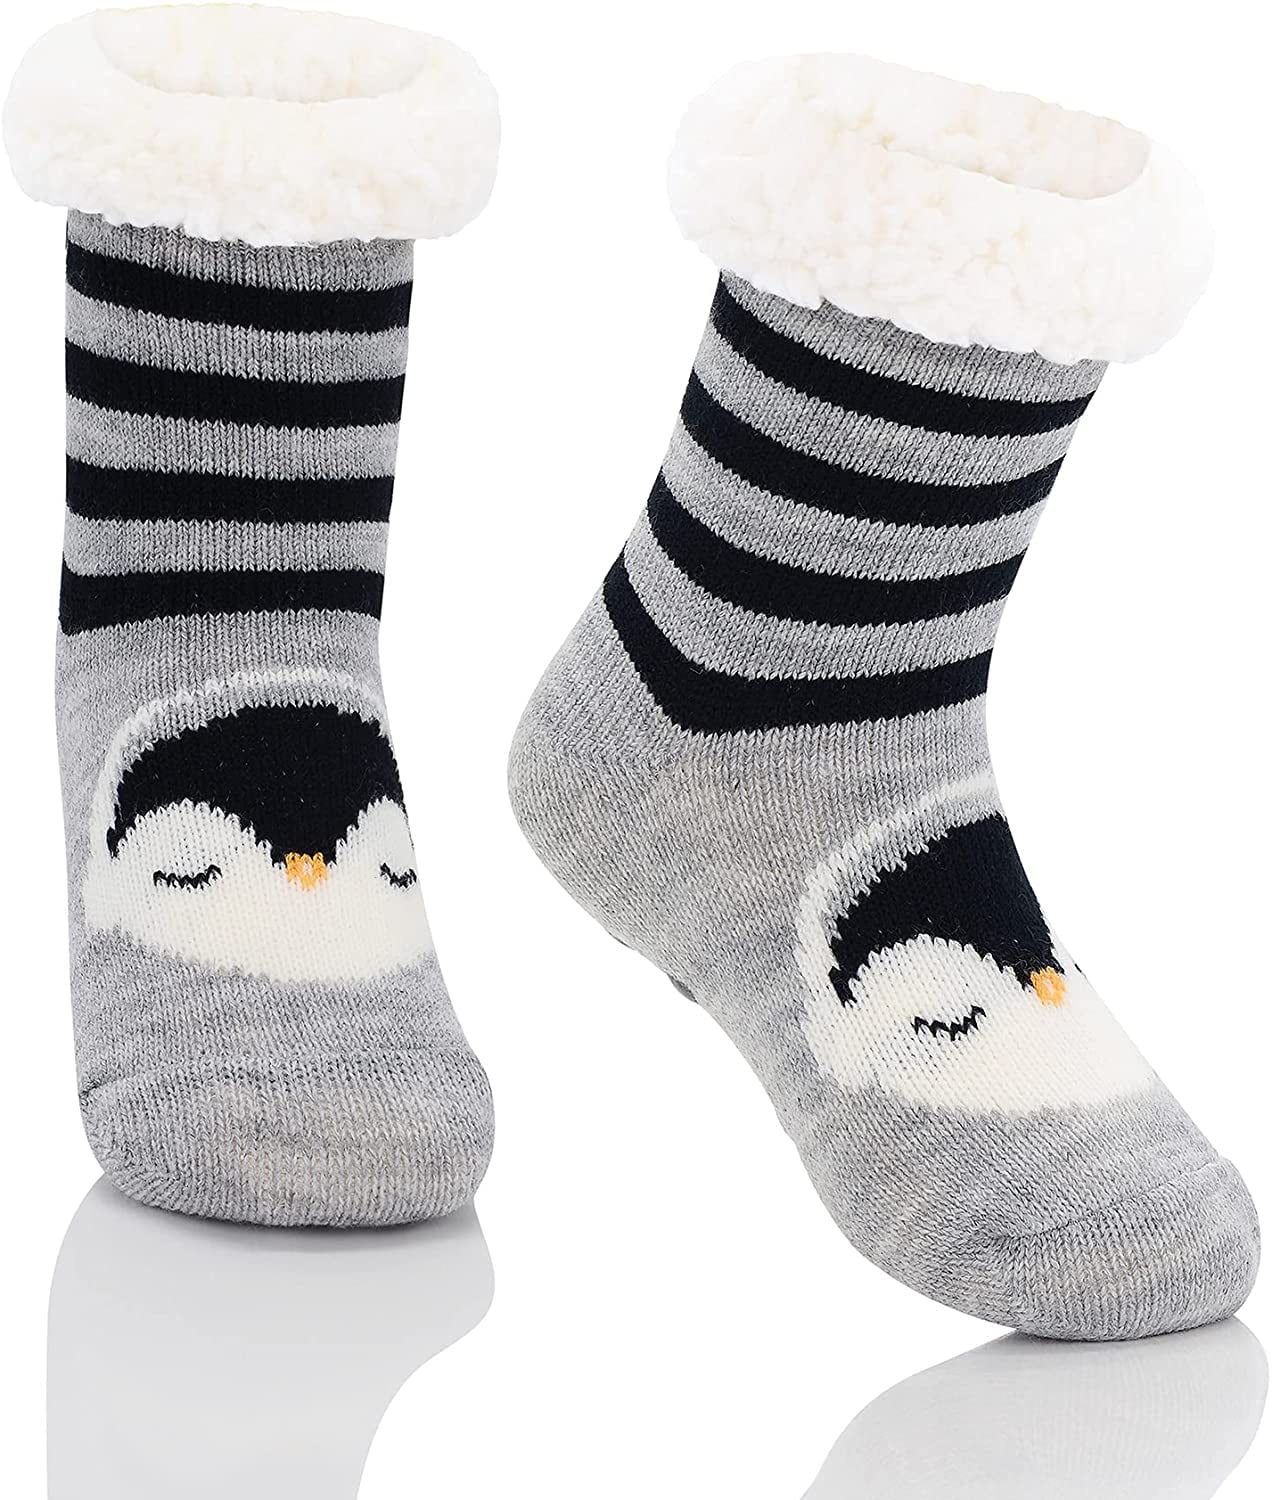 Women Slipper Socks,Sunew Girls Winter Warm Thick Fleece Lining Socks Fuzzy Soft Home Grippers Thermal Socks 